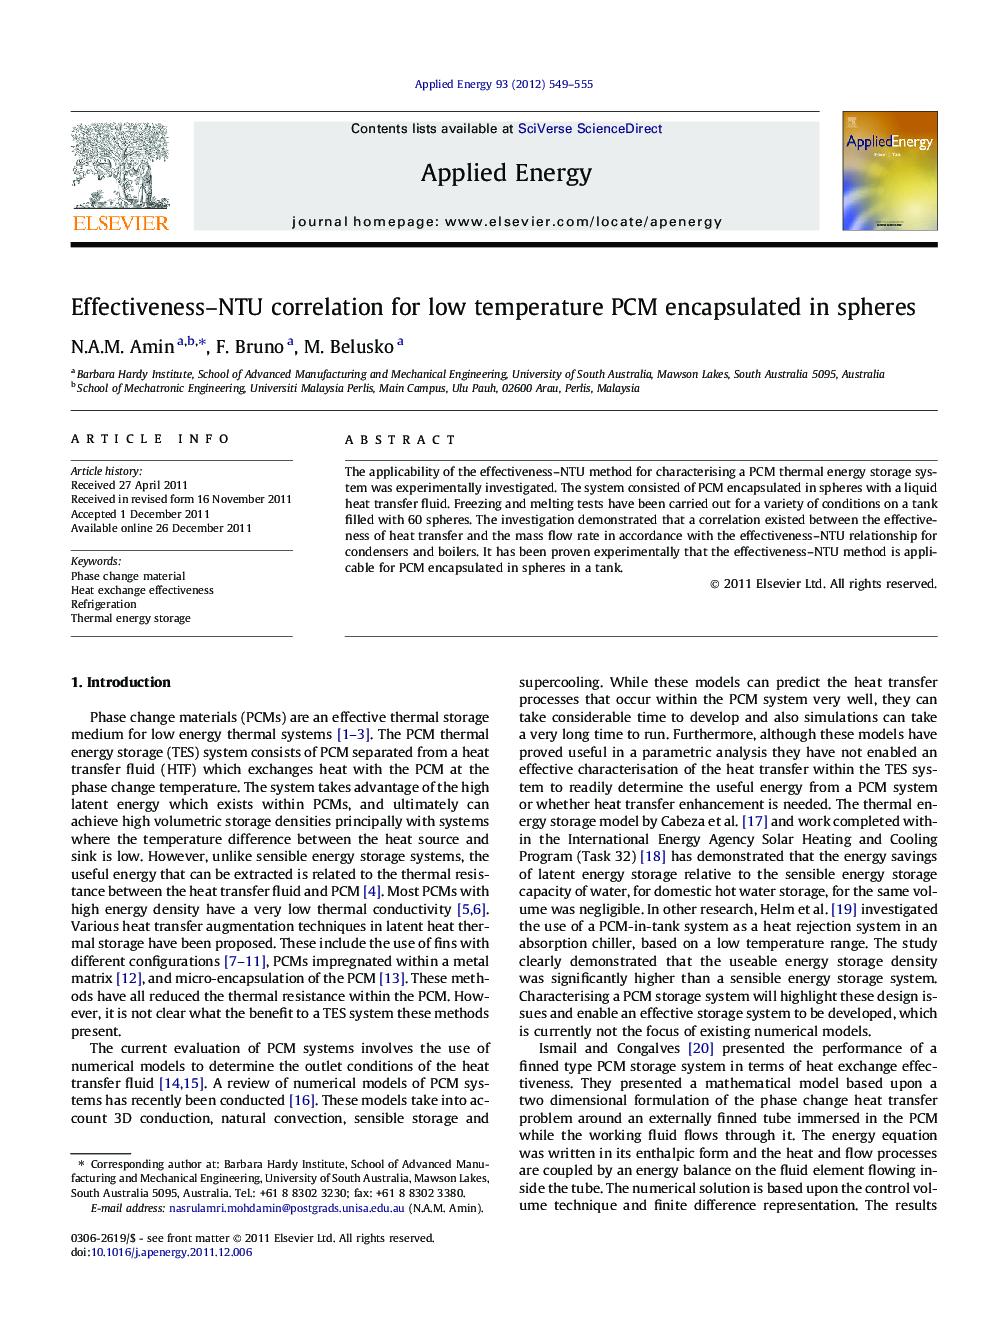 Effectiveness–NTU correlation for low temperature PCM encapsulated in spheres